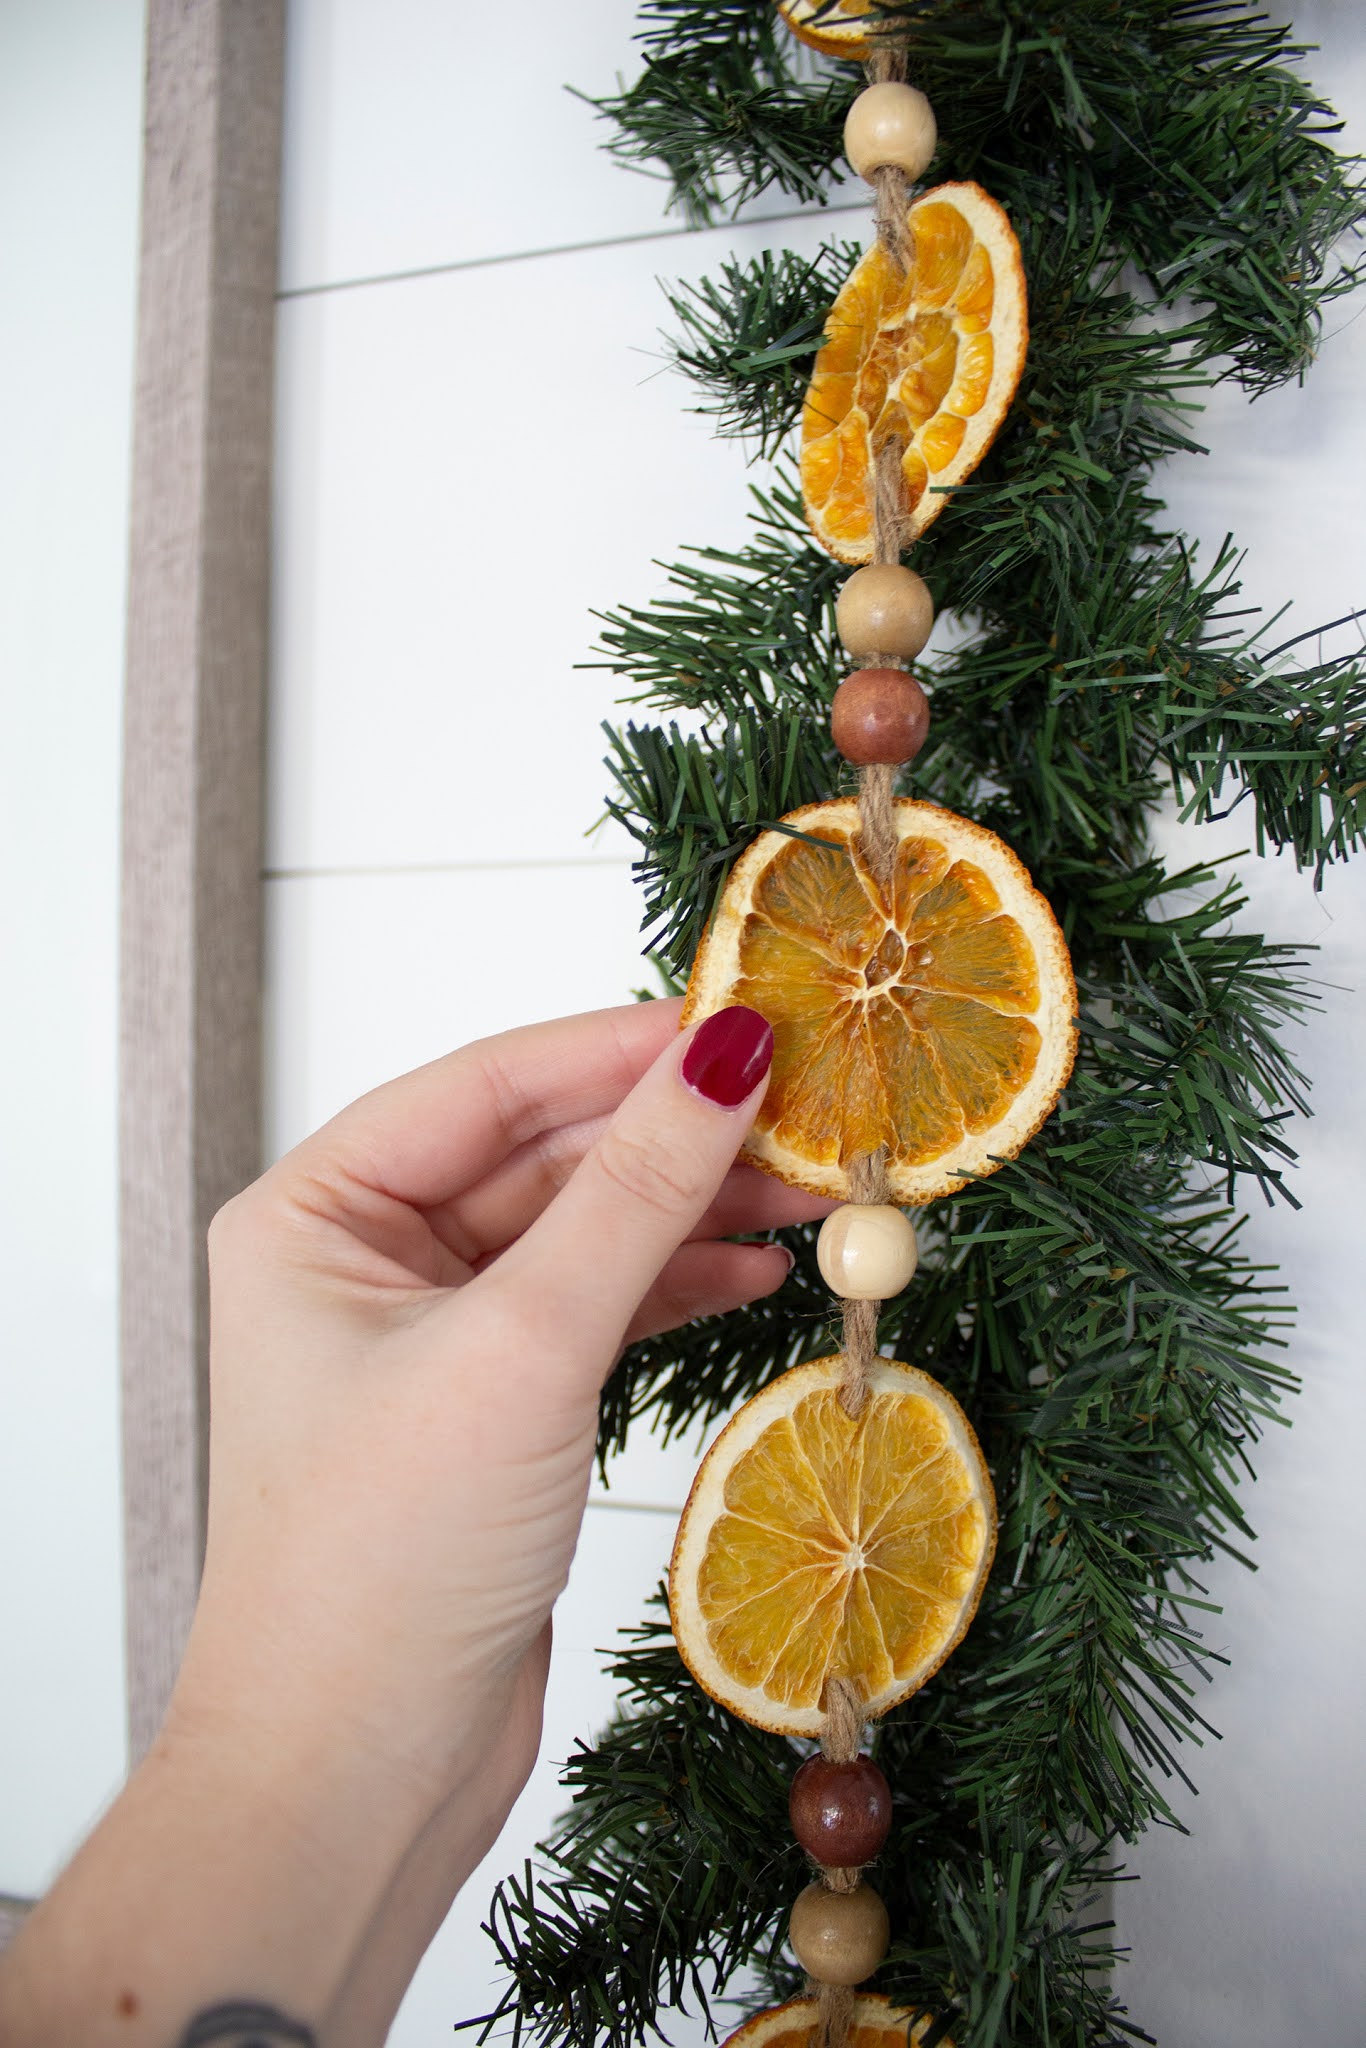 DIY Orange Slice Garland for the Christmas Tree